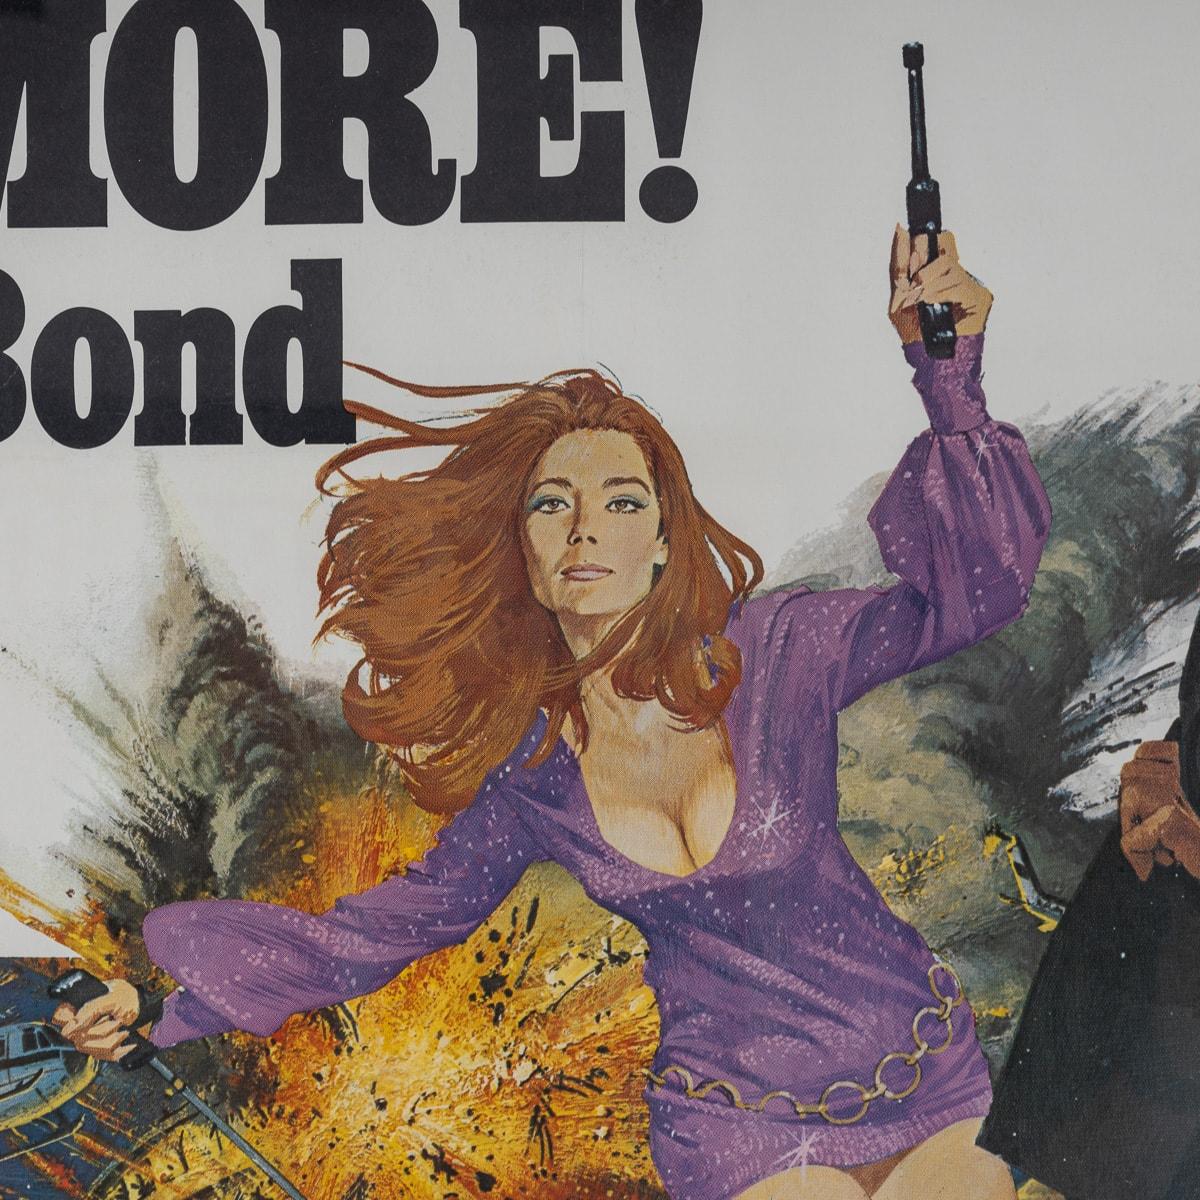 Acrylic U.S Release James Bond 007 'On Her Majesty's Secret Service' Poster c.1969 For Sale